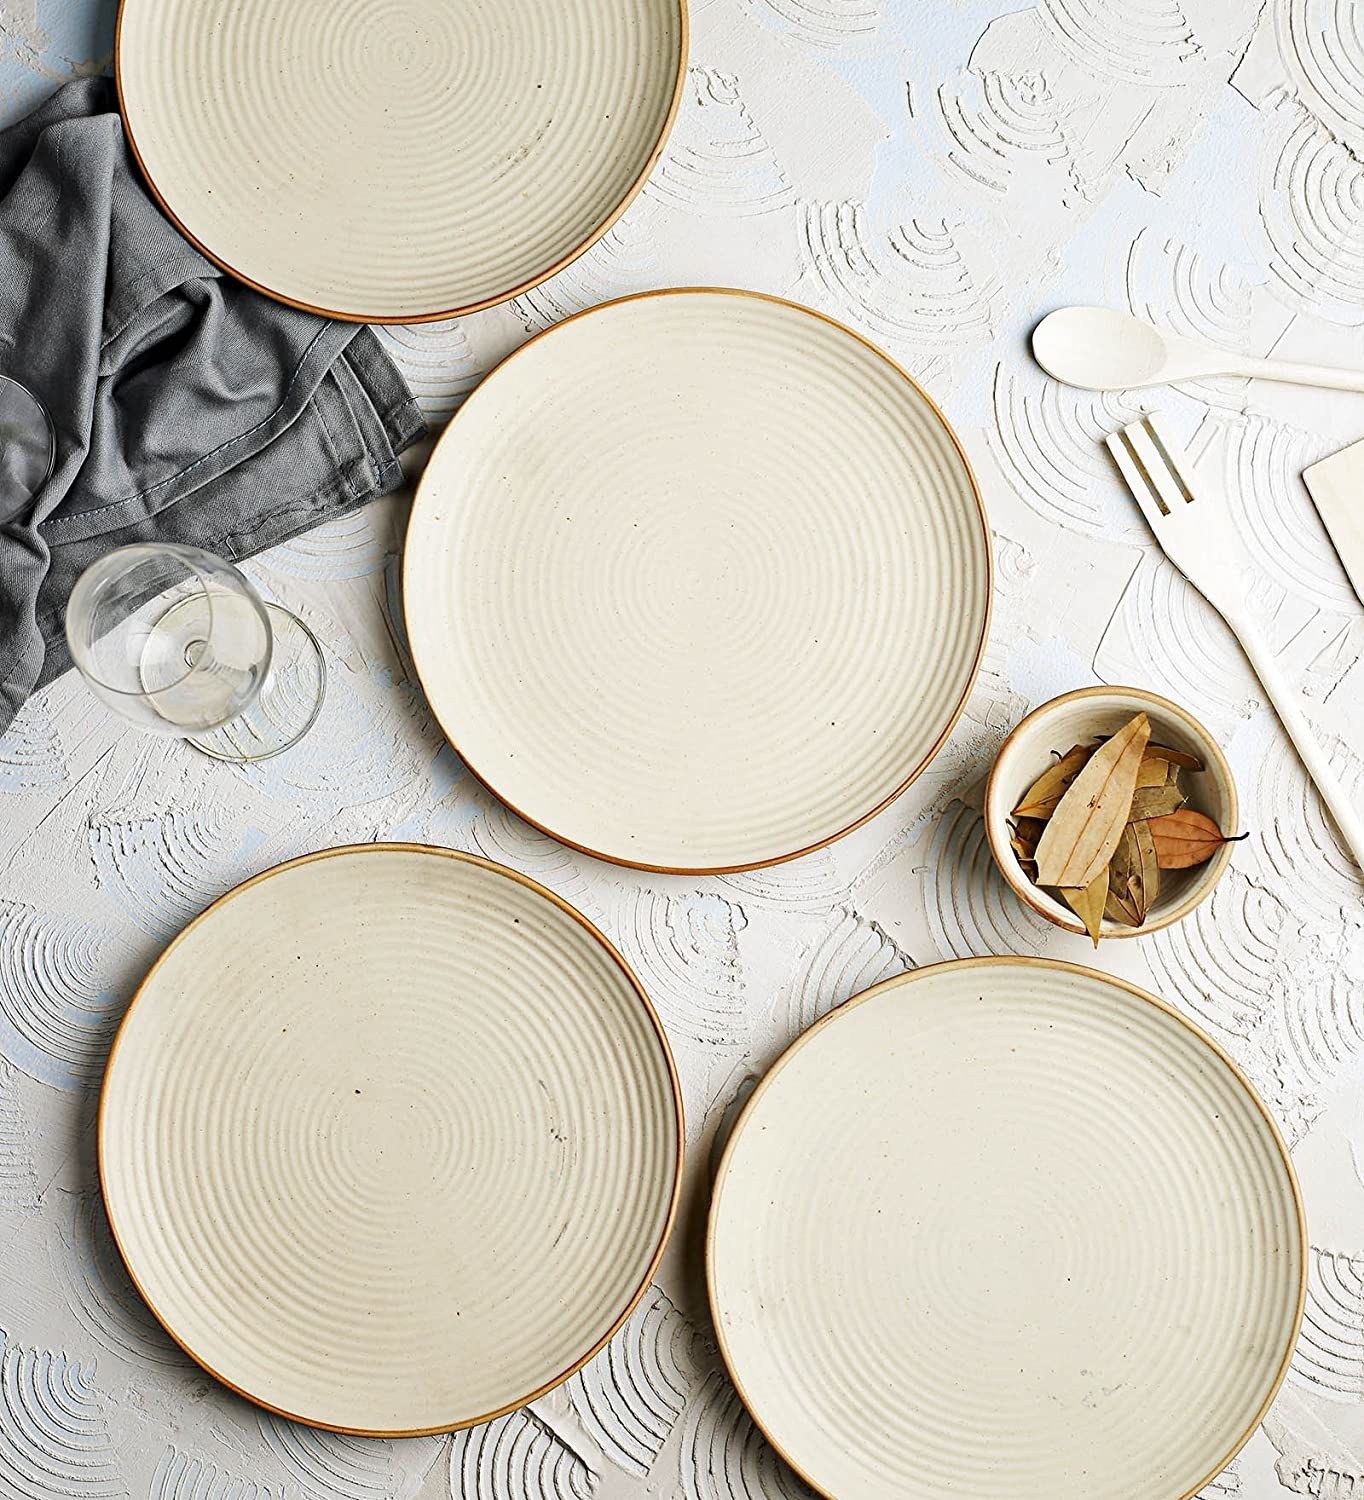 Three dinner plates on a table